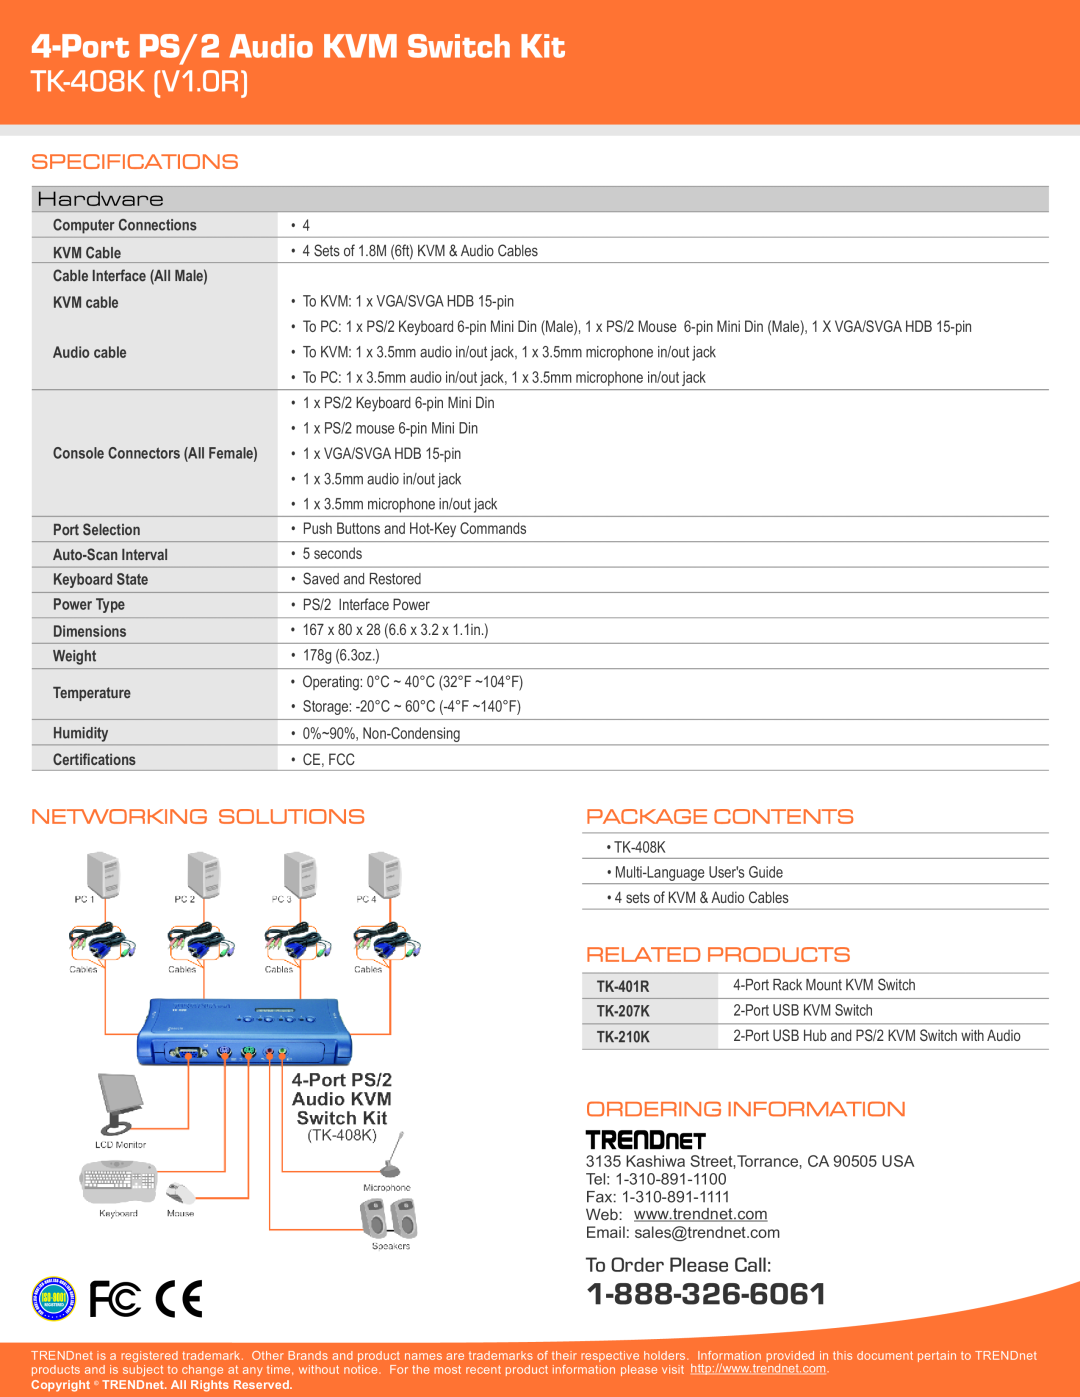 TRENDnet warranty Port PS/2 Audio KVM Switch Kit, TK-408K V1.0R, Specifications, Hardware, Networking Solutions 